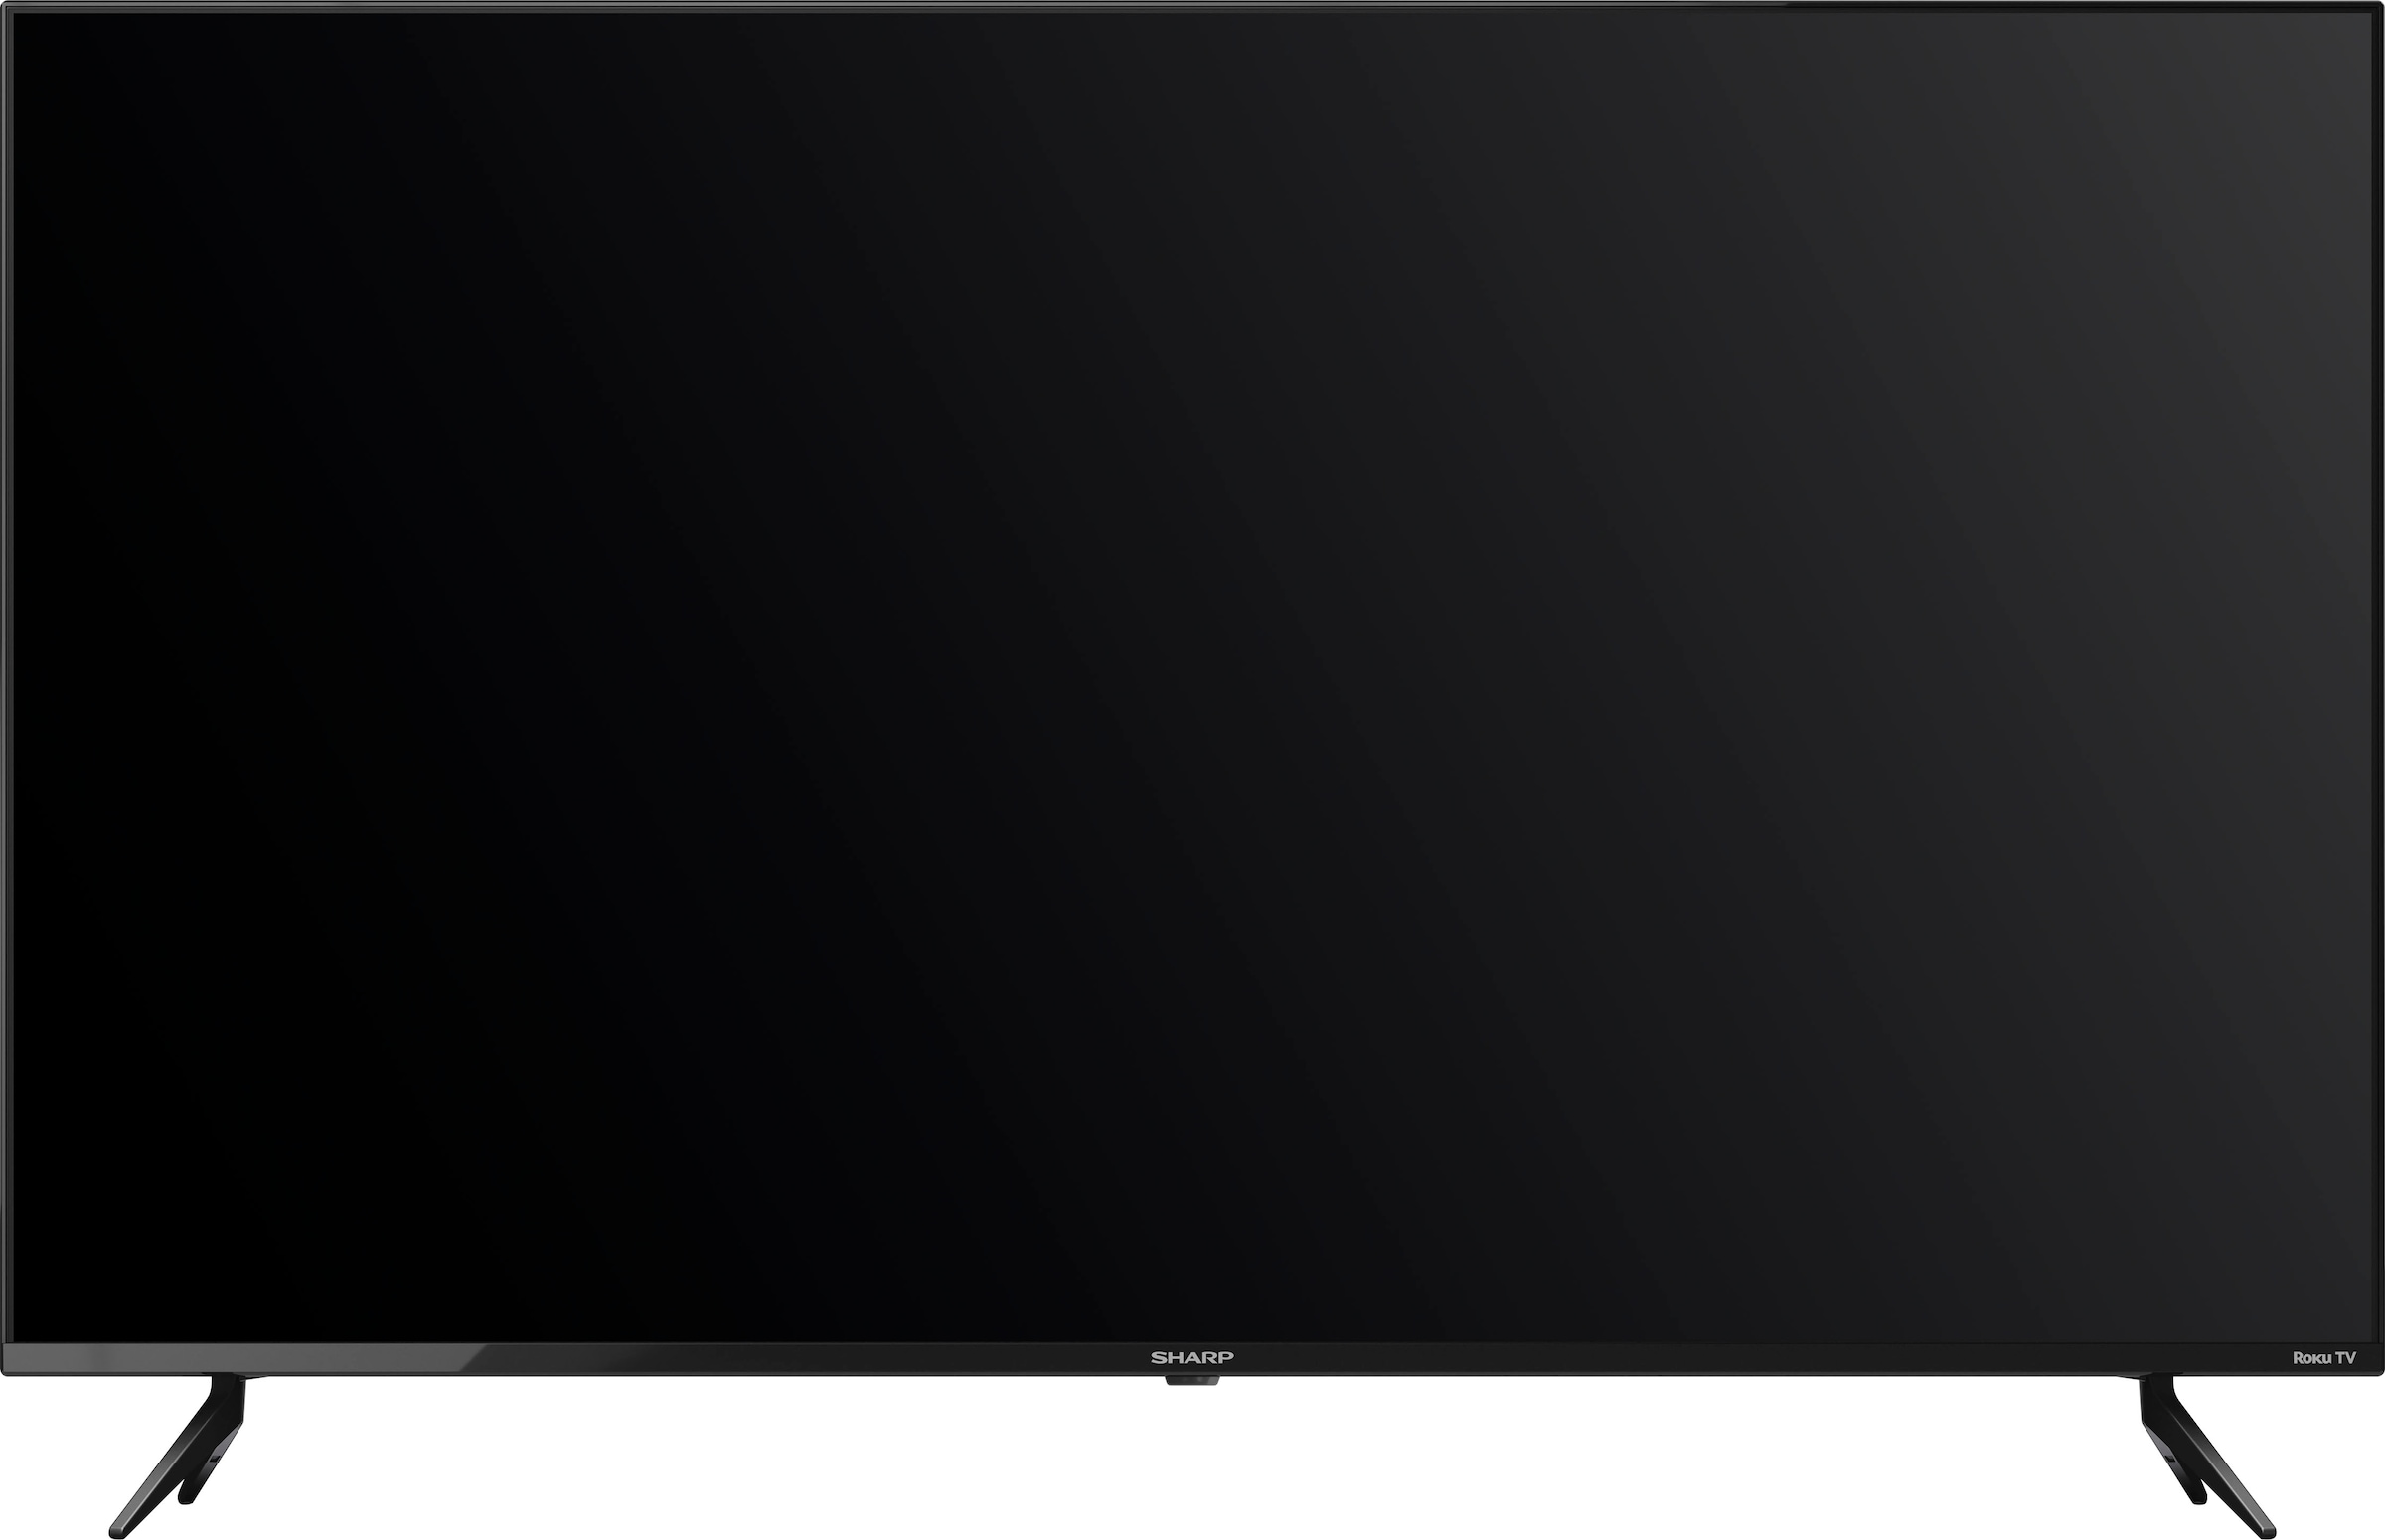 Sharp LED-Fernseher »4T-C55FJx«, 139 cm/55 Zoll, 4K Ultra HD, Smart-TV, Roku TV nur in Deutschland verfügbar, Rahmenlos, HDR10, Dolby Digital